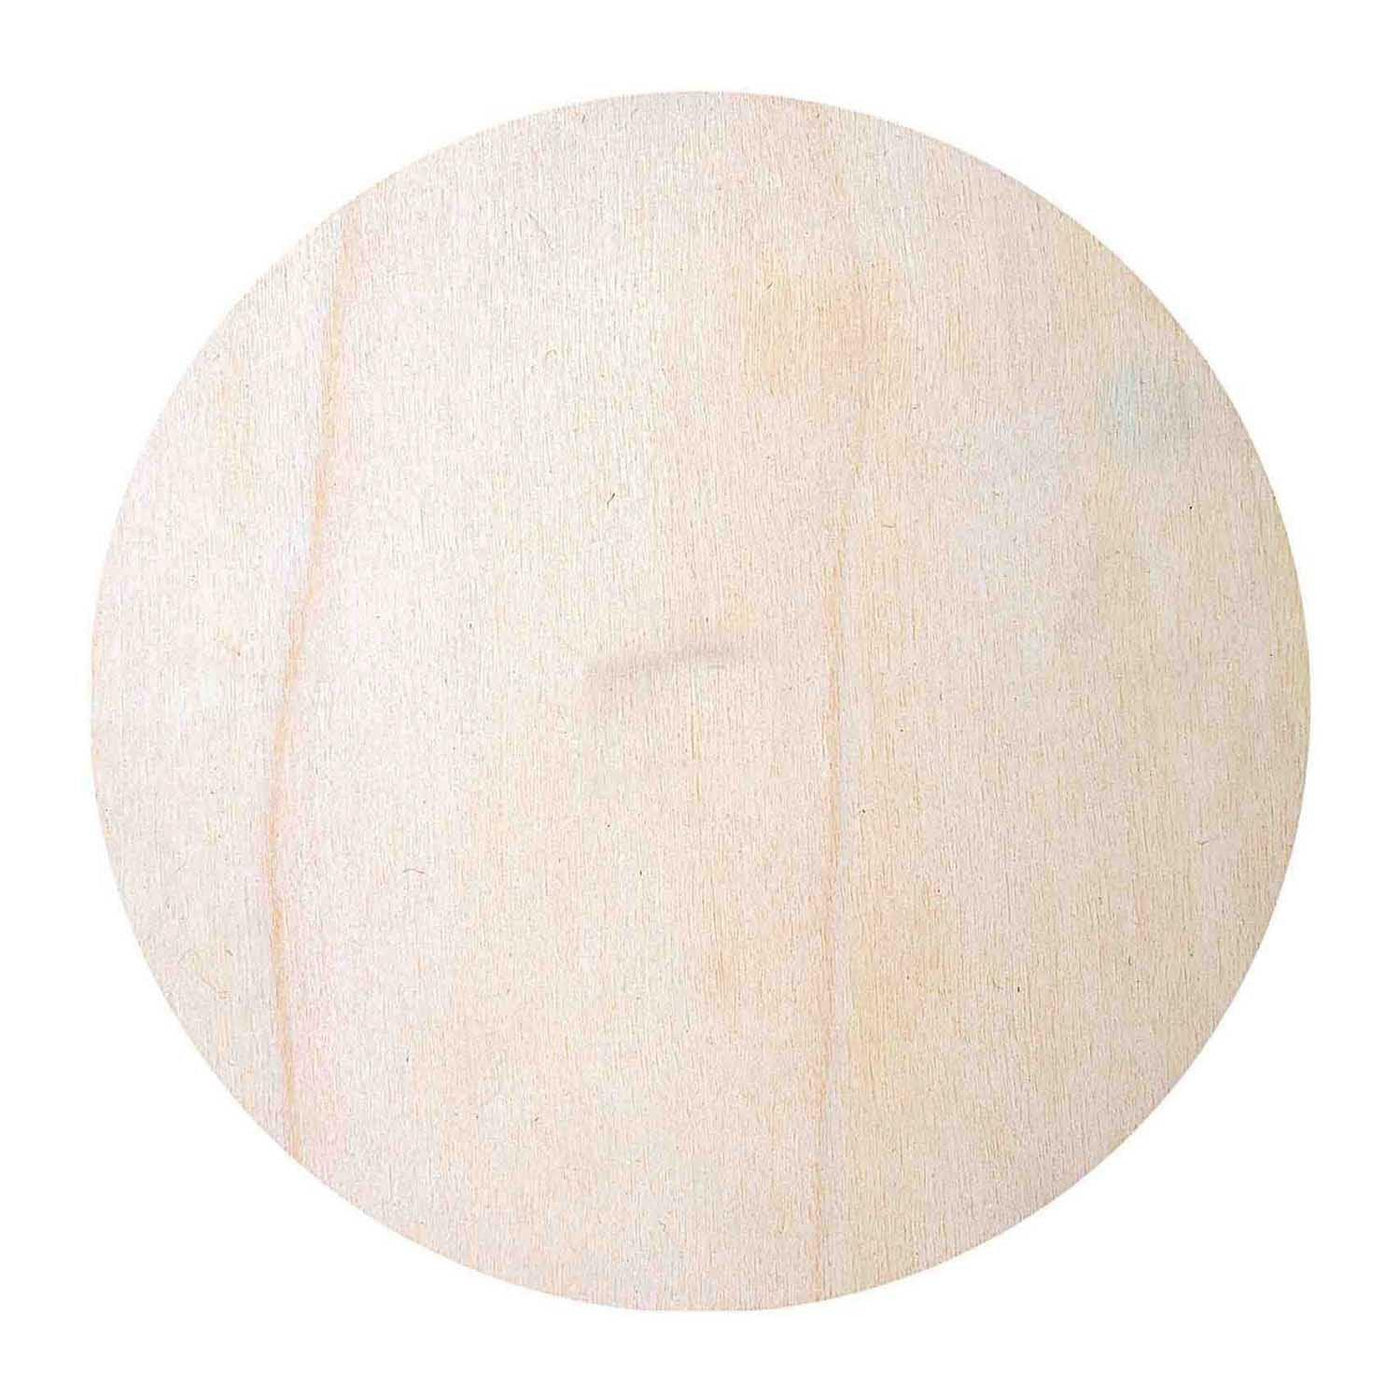 Wooden Round Discs - 9.5cm - Pack of 3